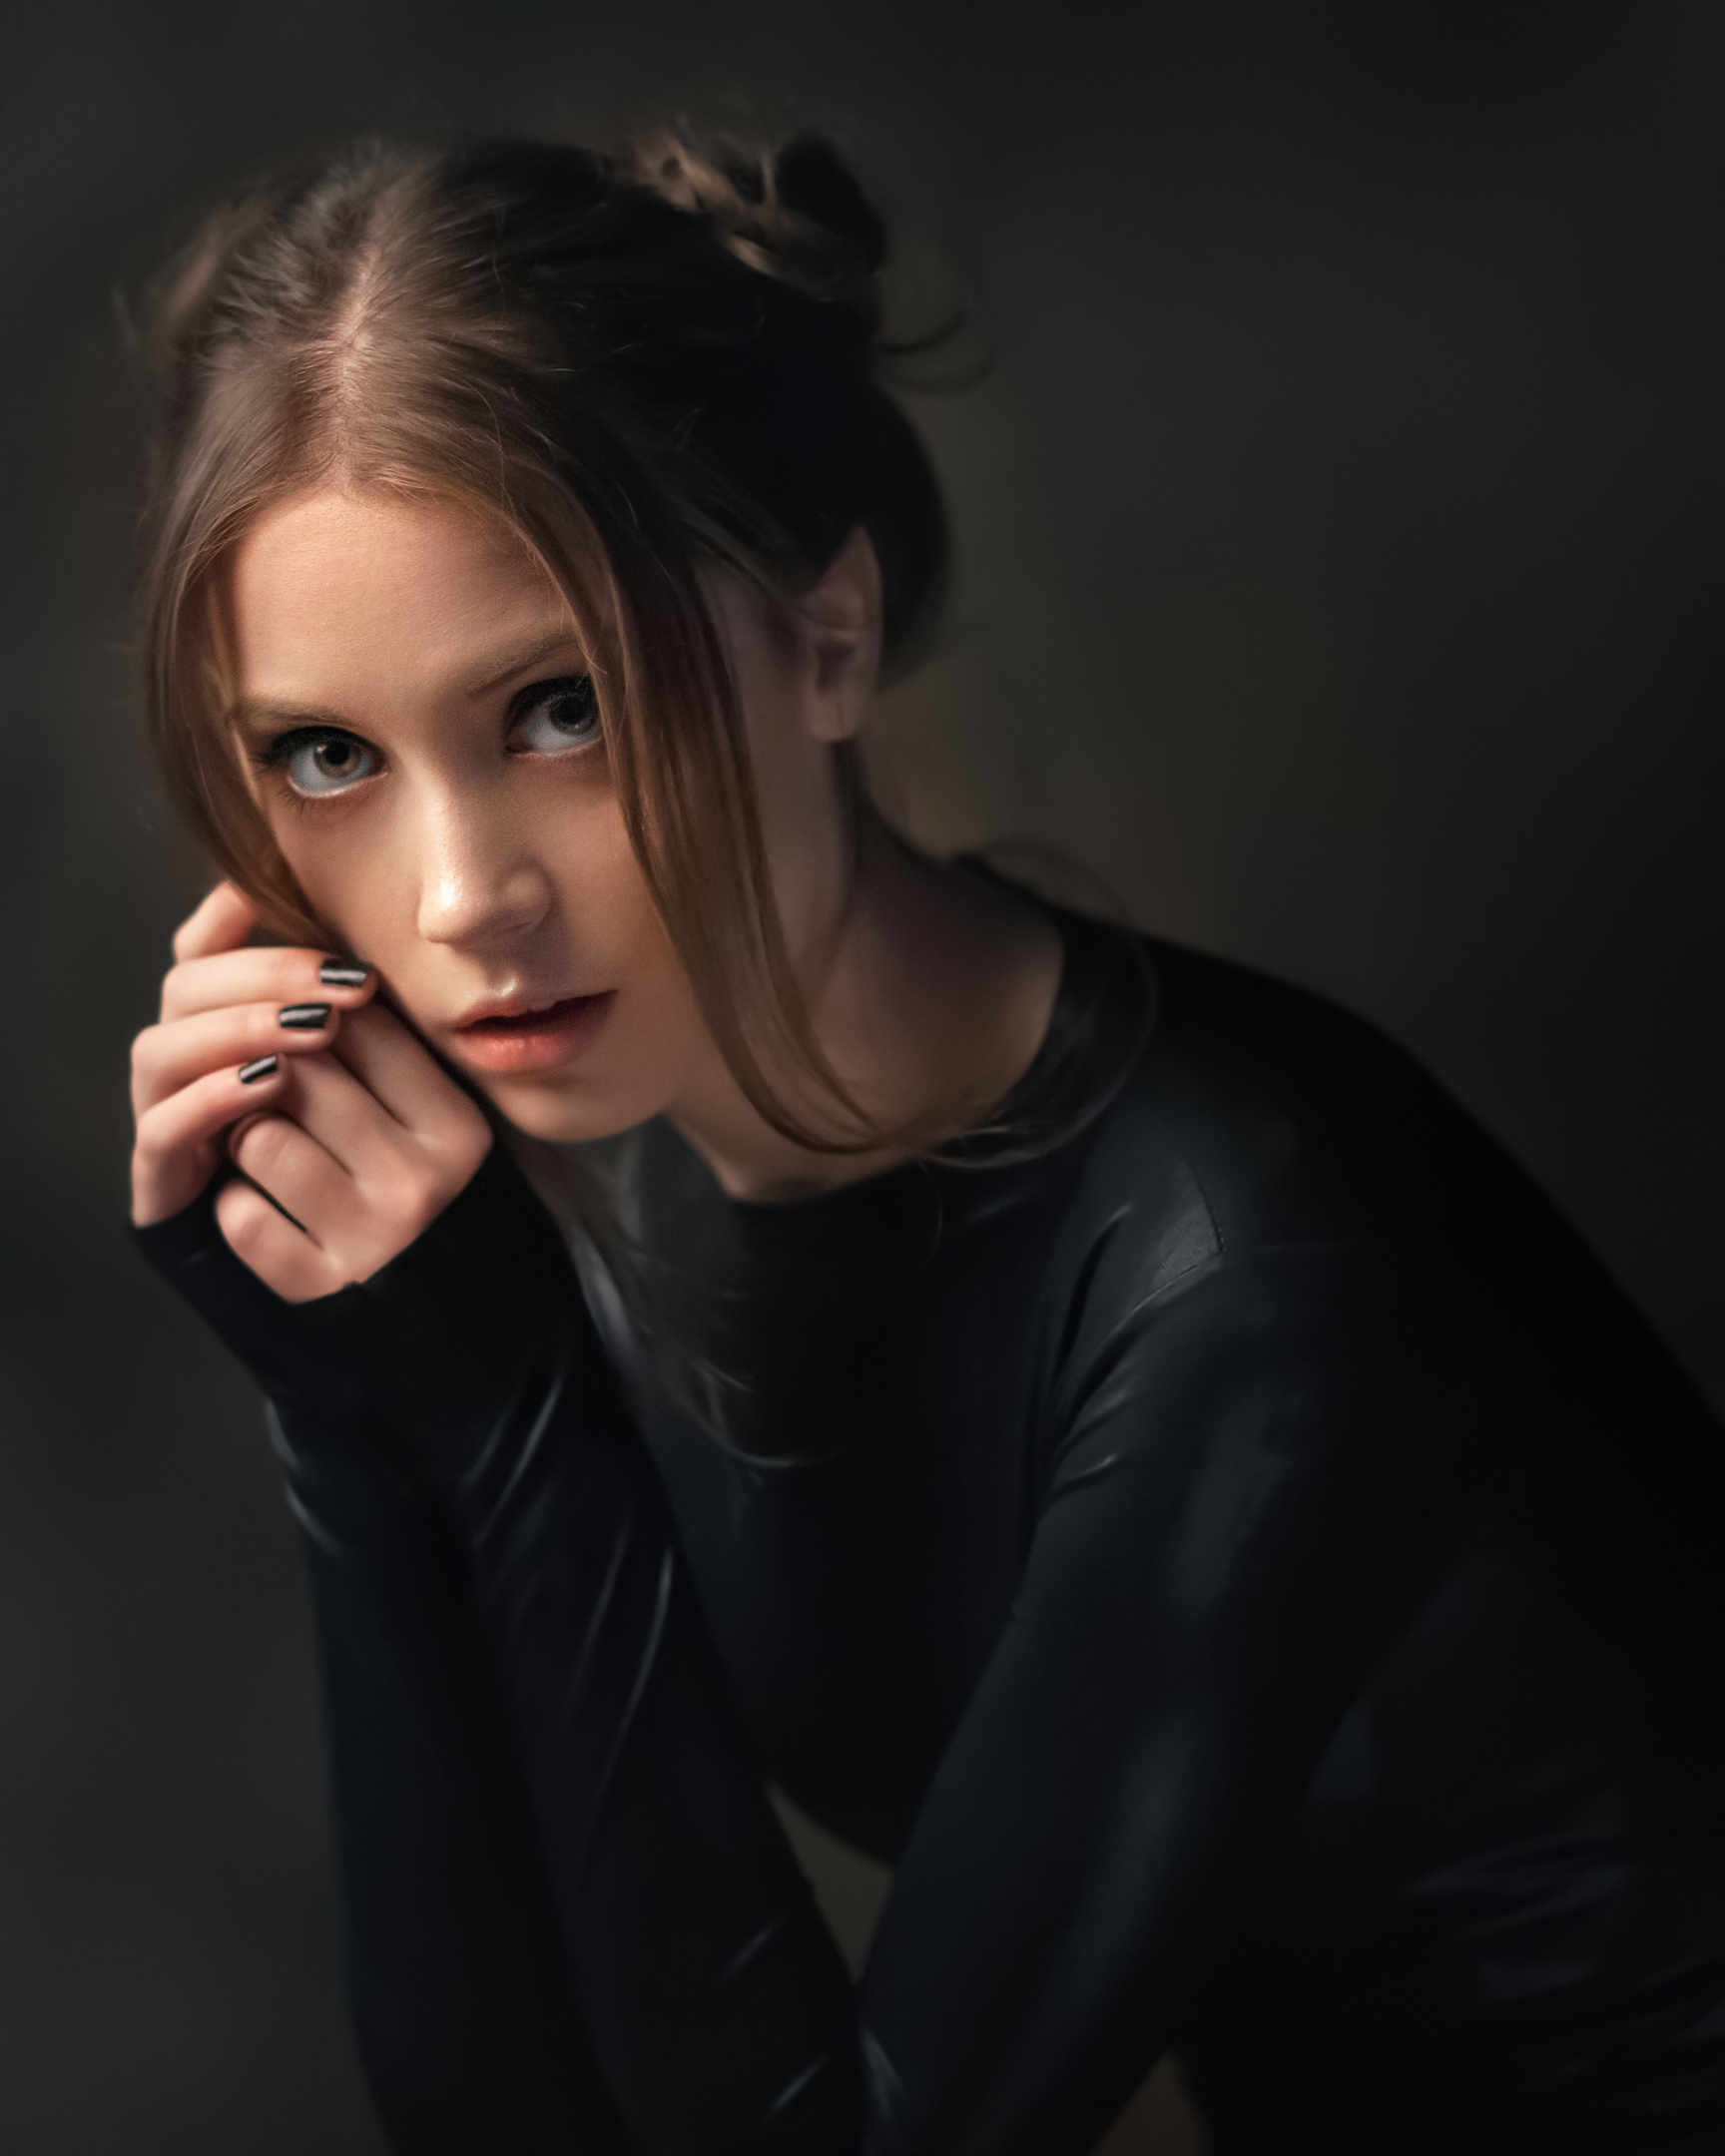 Alexey Kishechkin Women Ksenia Kokoreva Brunette Portrait Makeup Black Clothing Black Nails Simple B 1728x2160